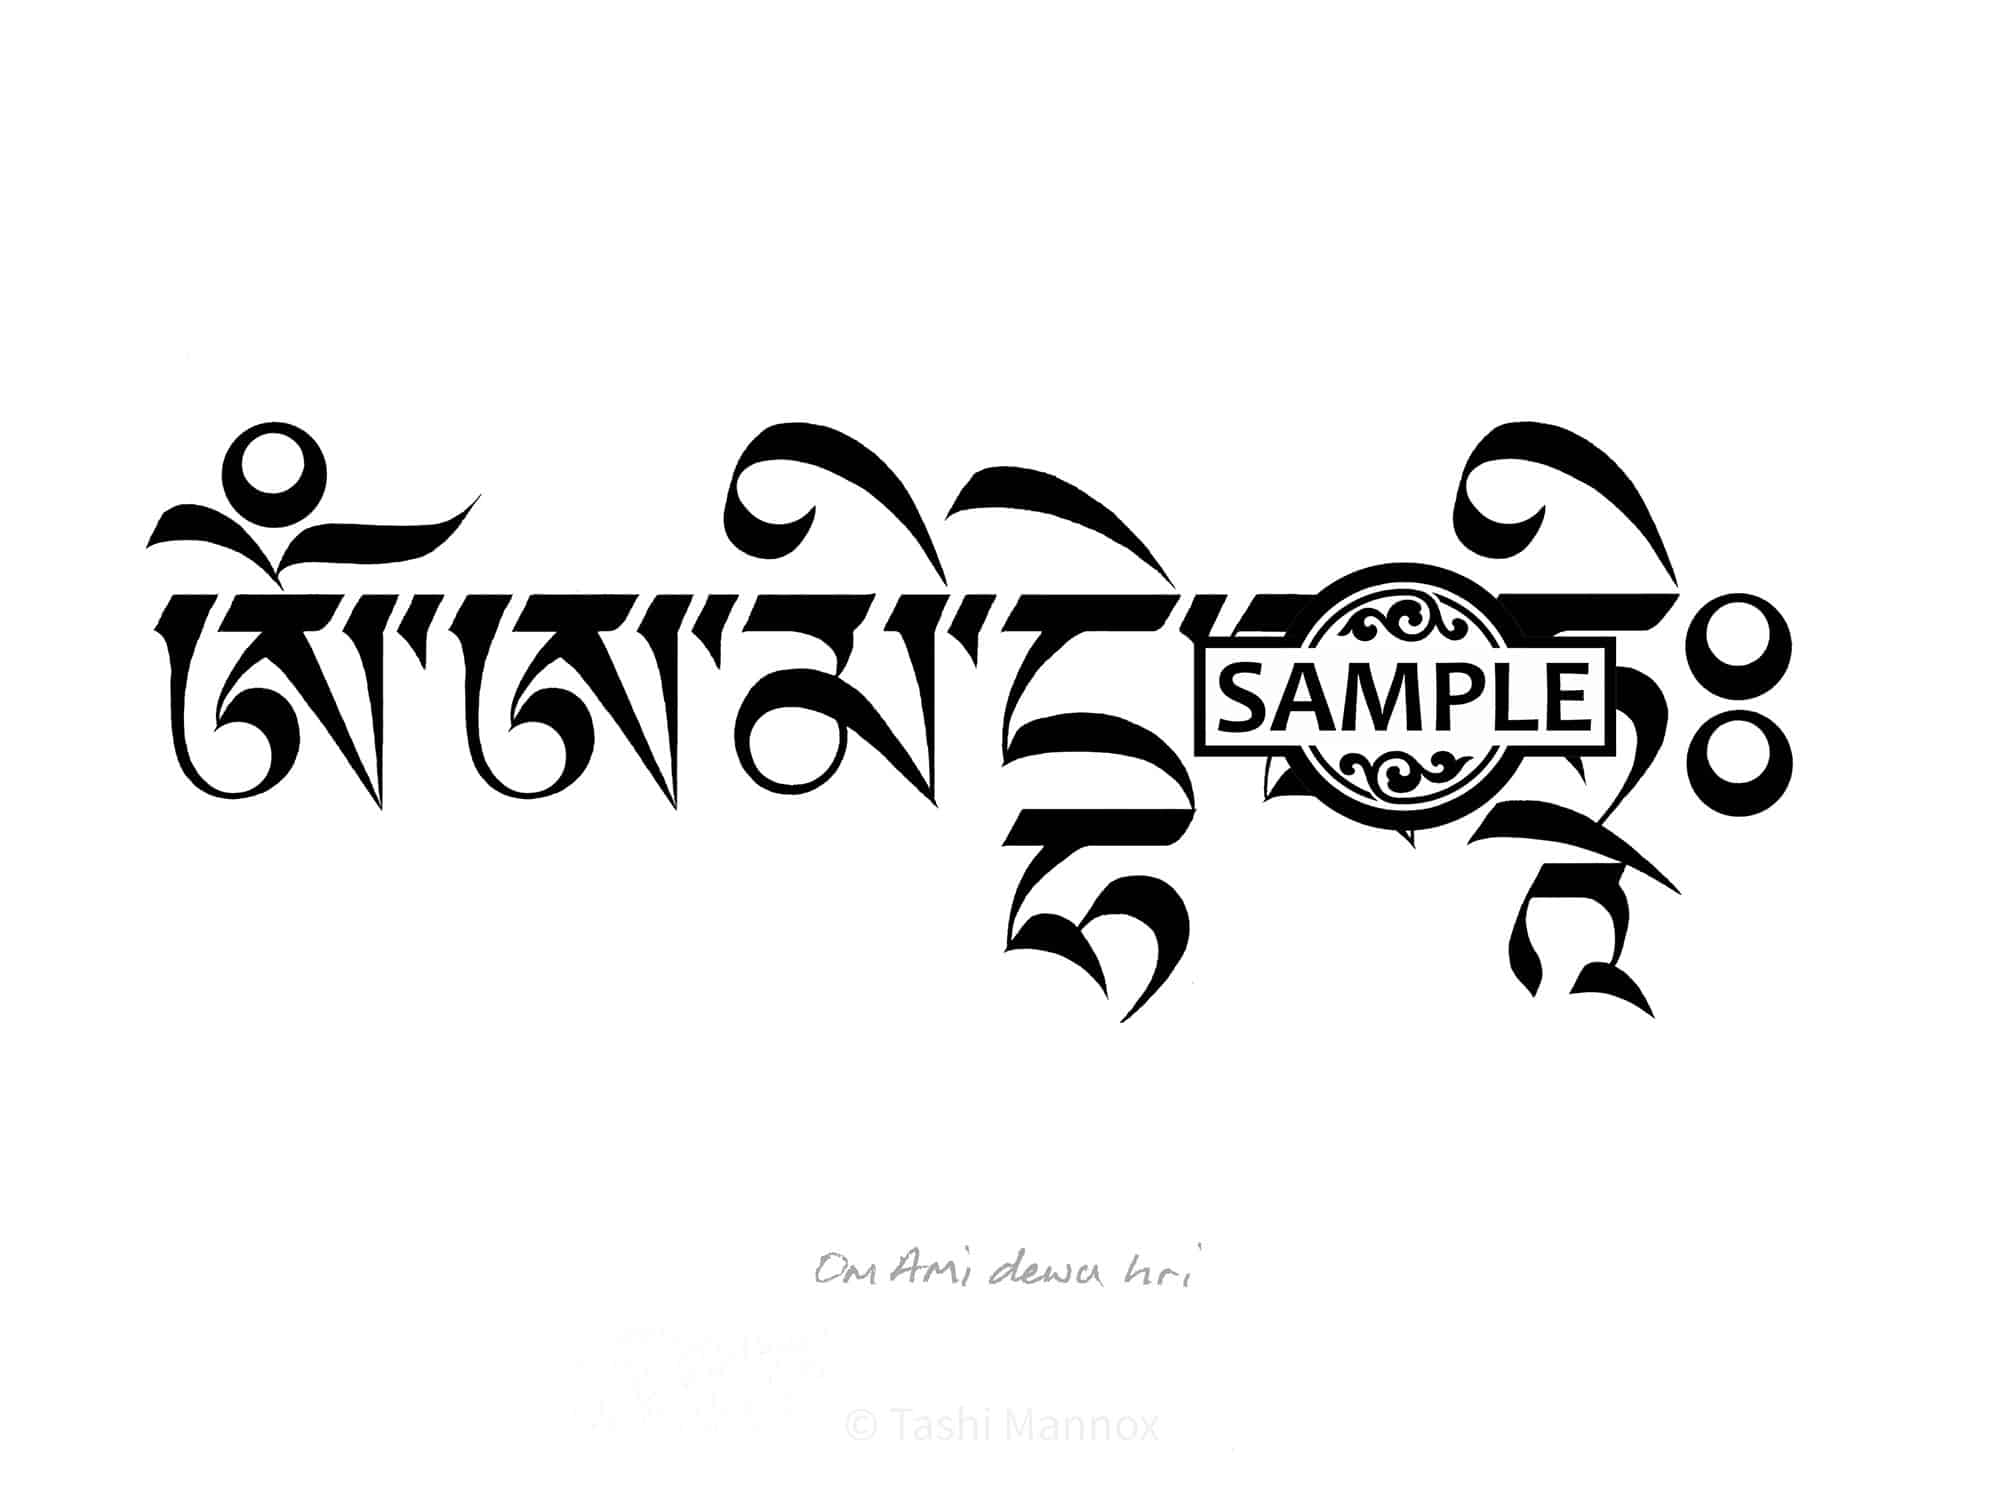 OM AH HUM. Tibetan Calligraphy by Tashi Mannox. | Arte della fata, Arte,  Tatuaggi